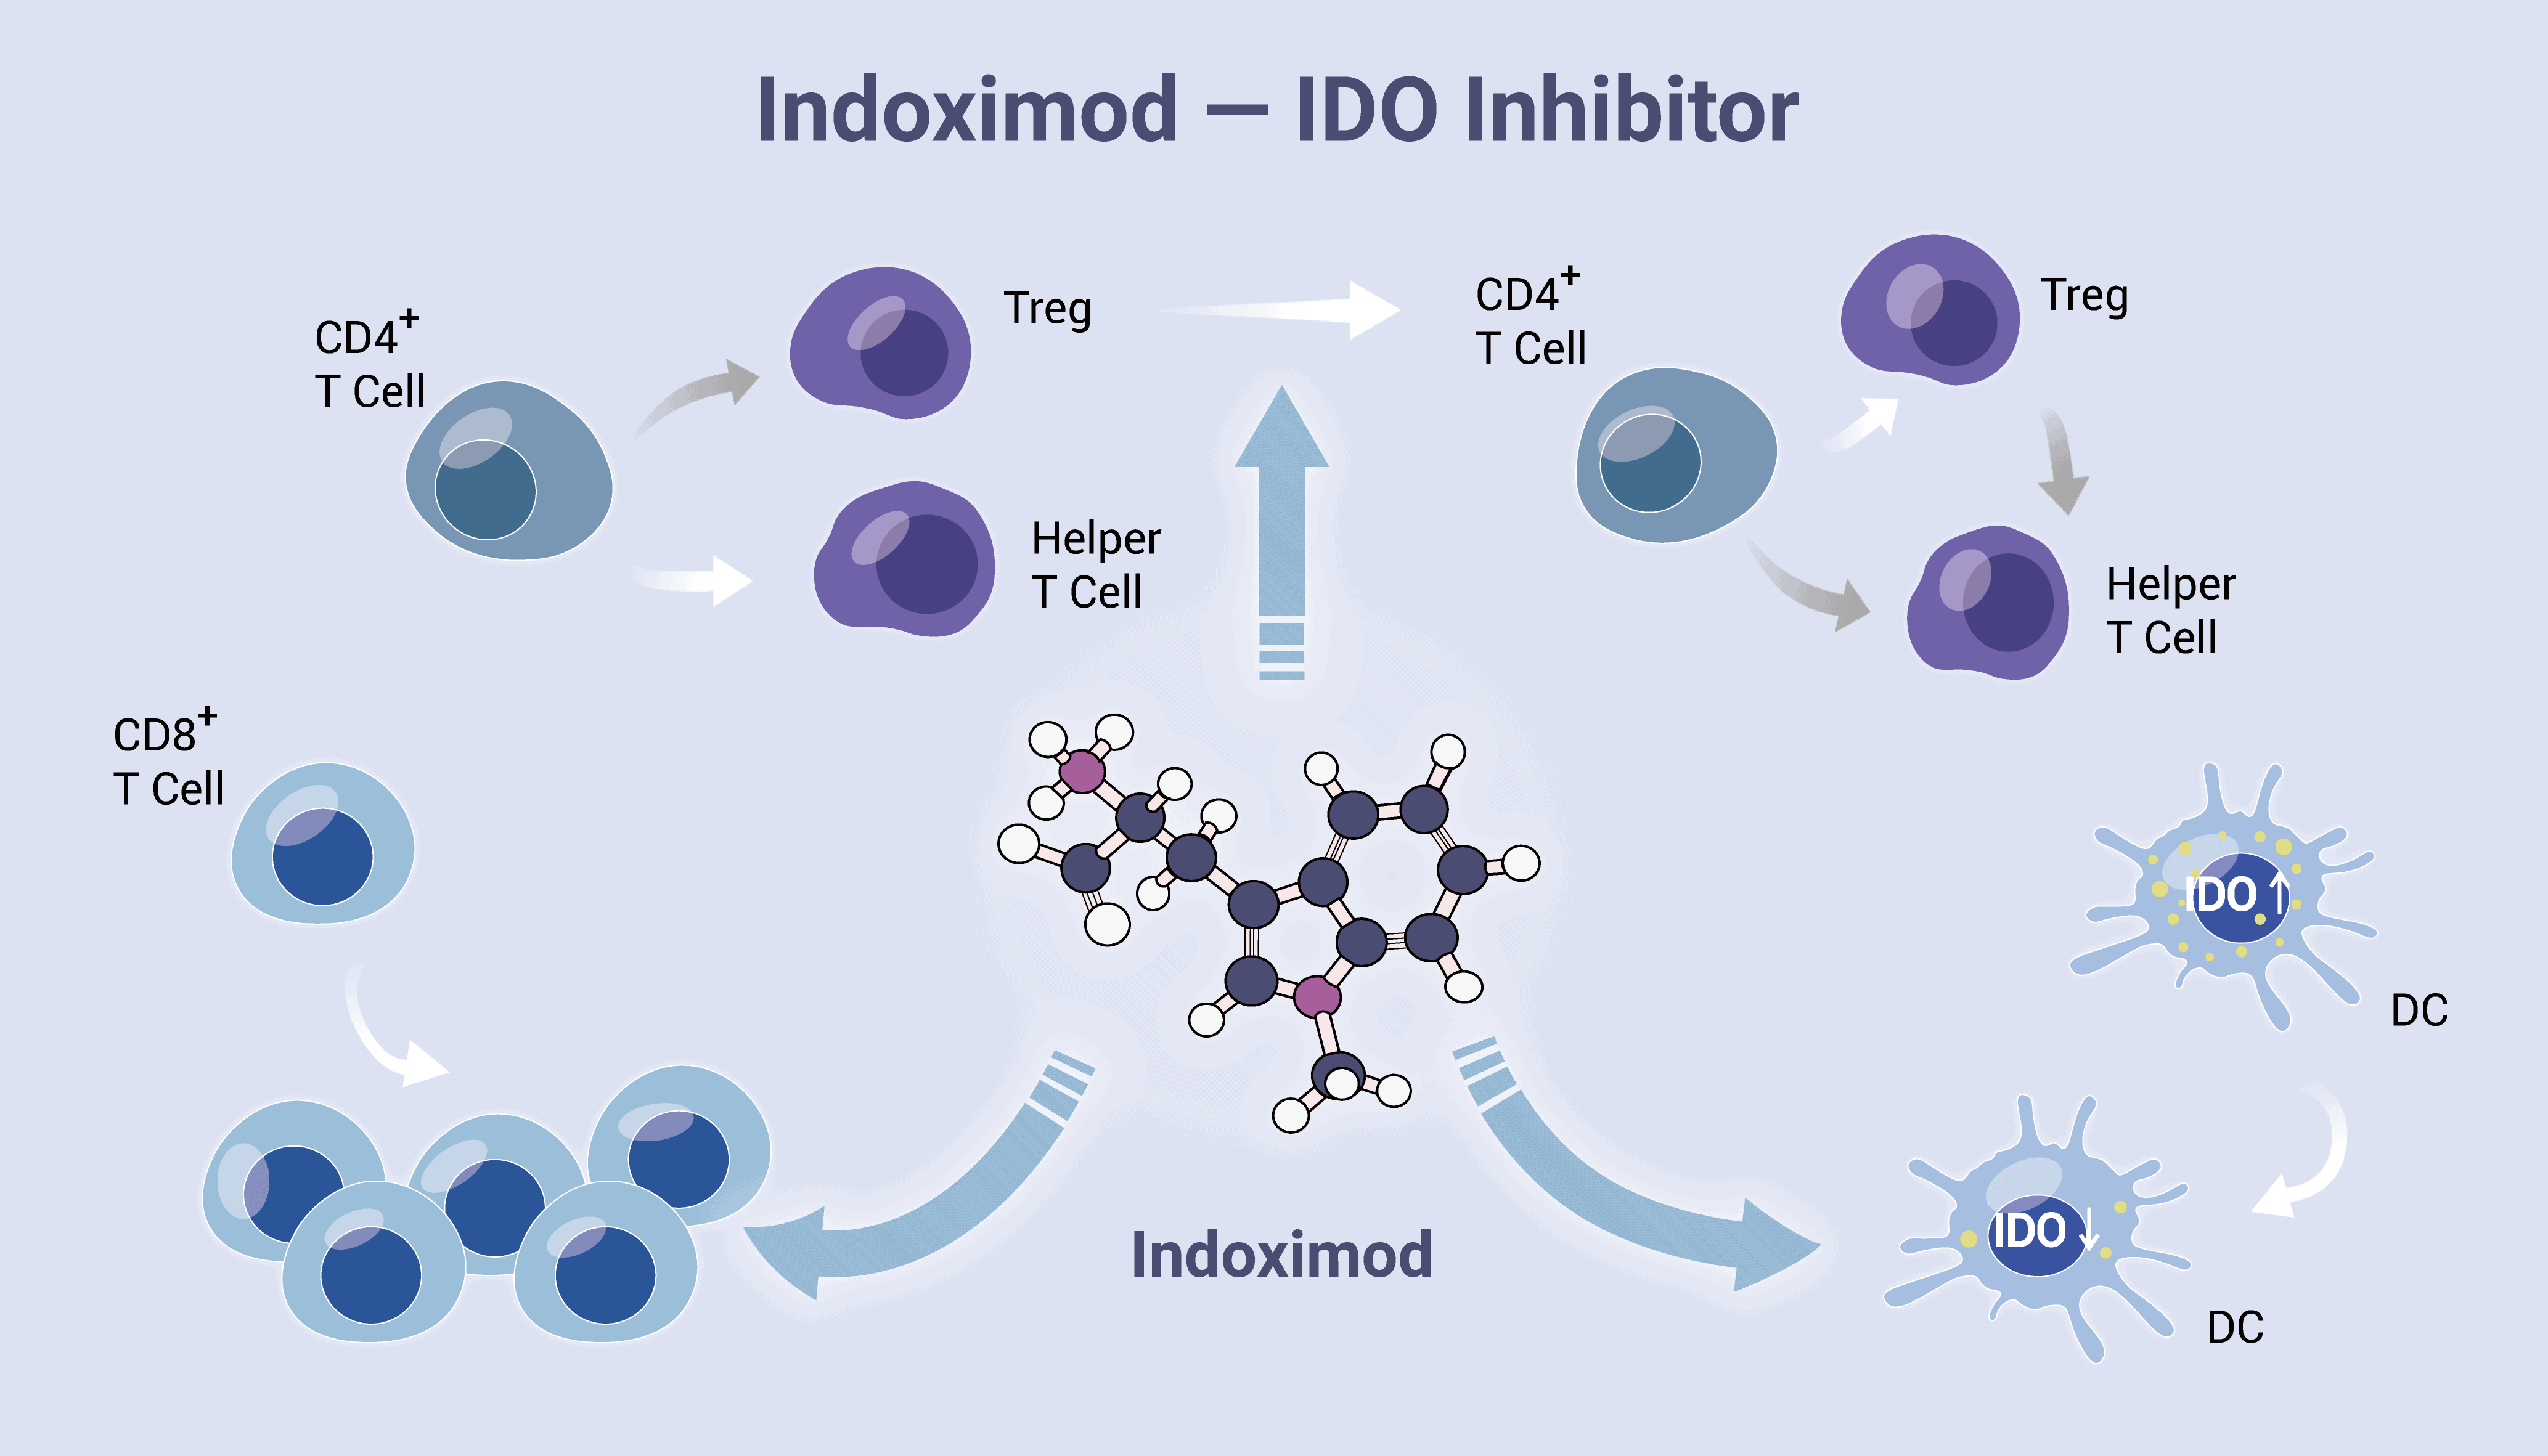 Indoximod An Immunometabolic Adjuvant is an IDO Pathway Inhibitor 2022 02 25 01 - Indoximod, An Immunometabolic Adjuvant, is an IDO Pathway Inhibitor